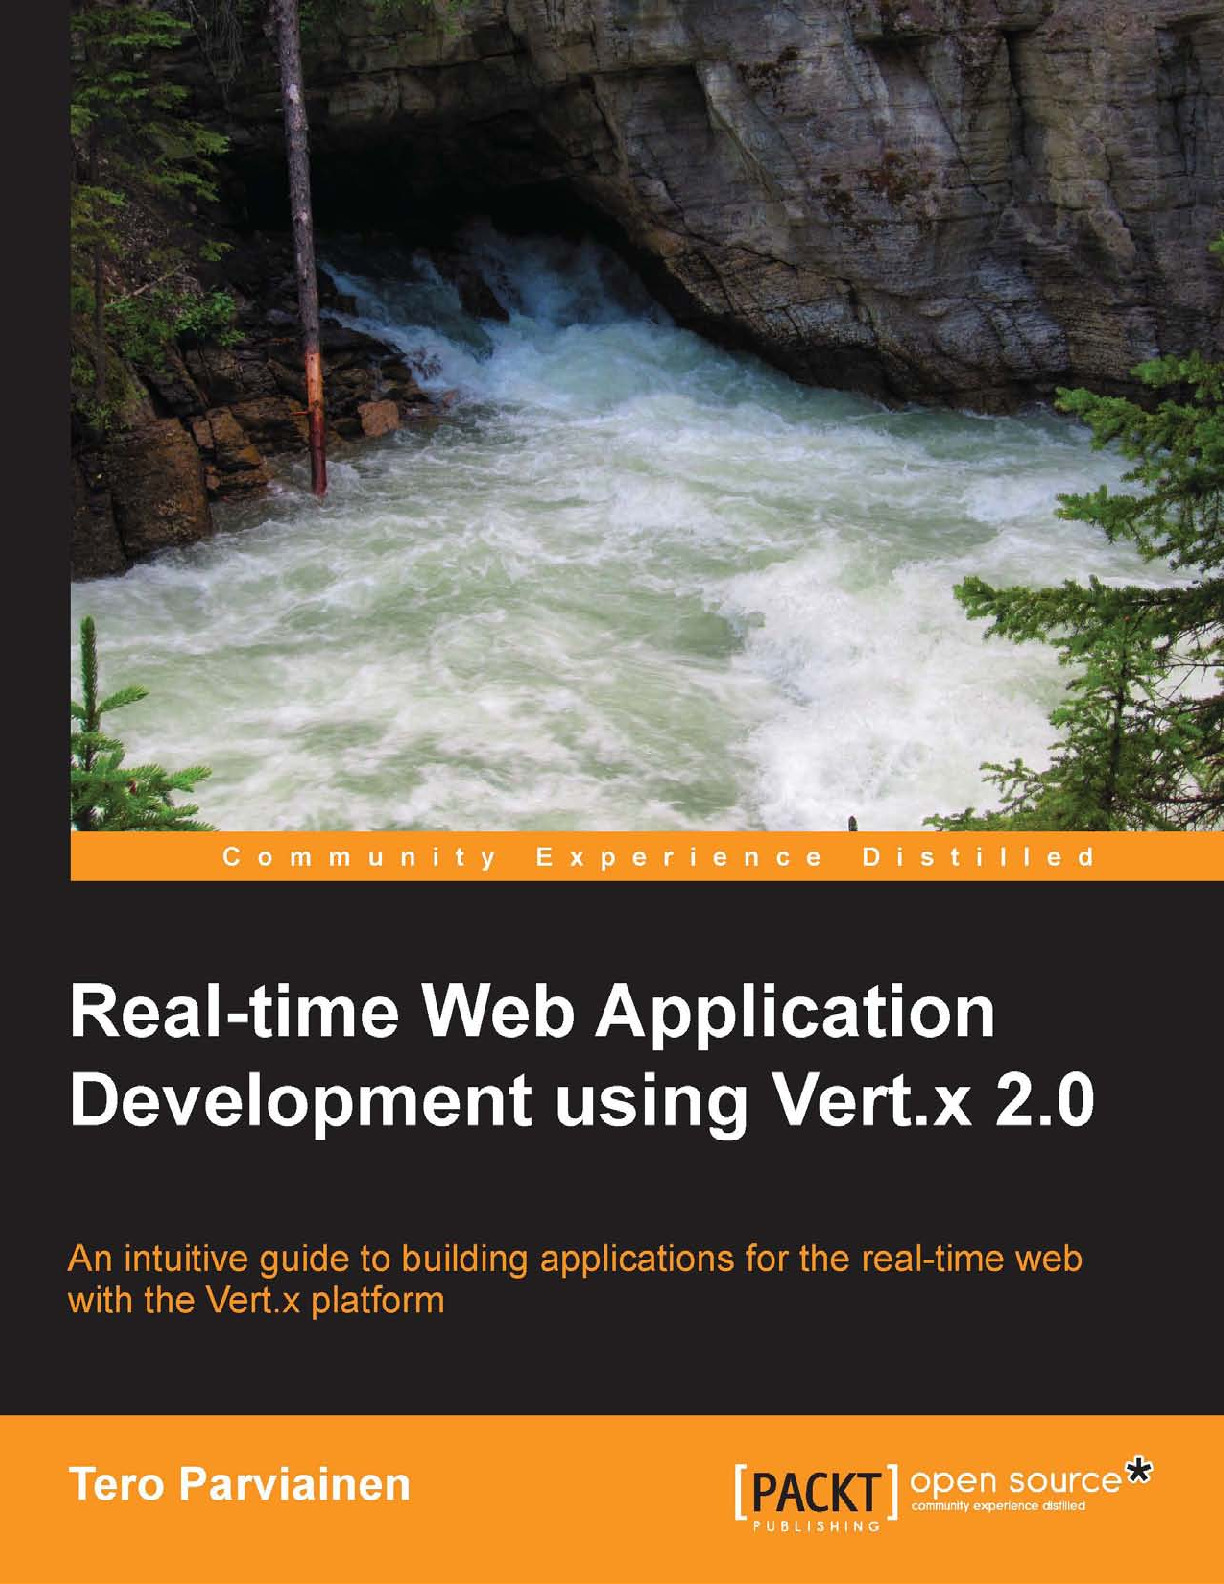 [Packt Publishing] Real-time Web Application Development using Vert.x 2.0